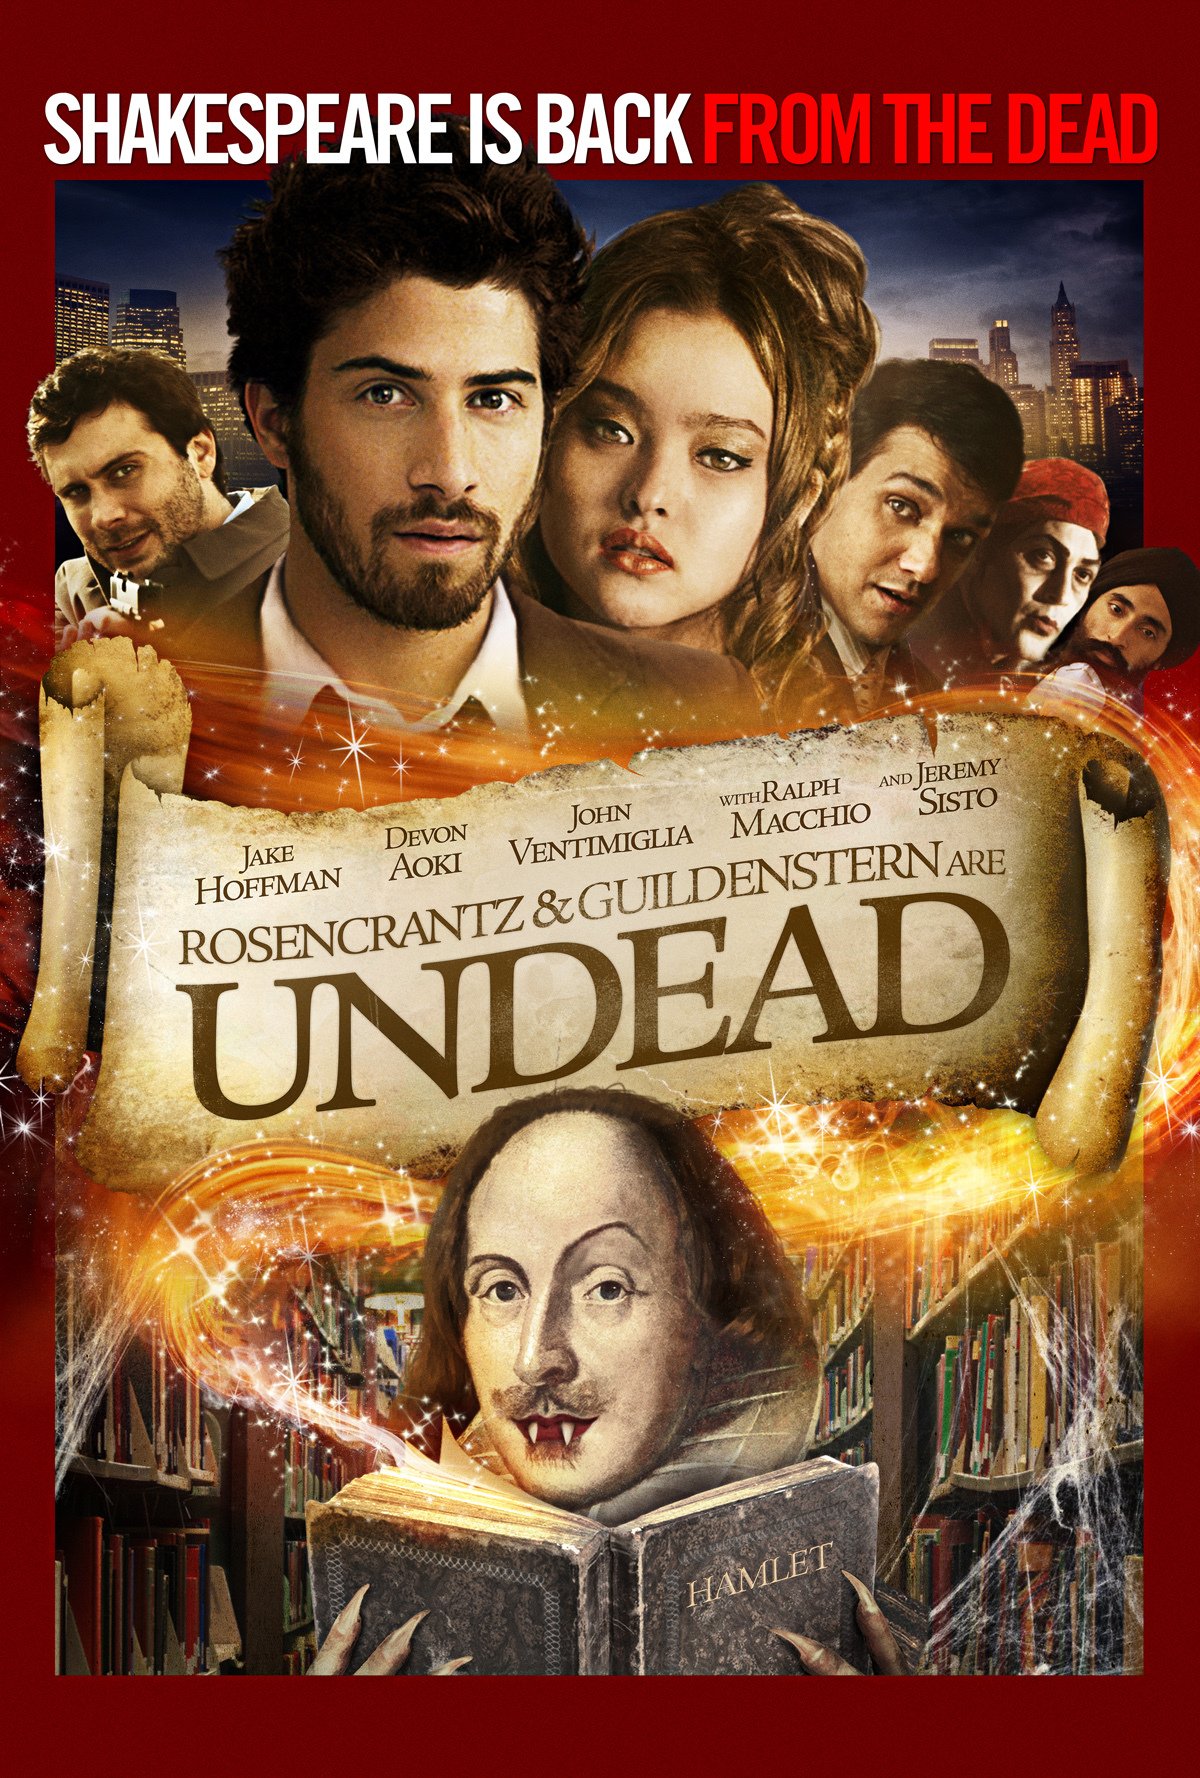 Feature Film Rosencrantz & Guildenstern are Undead